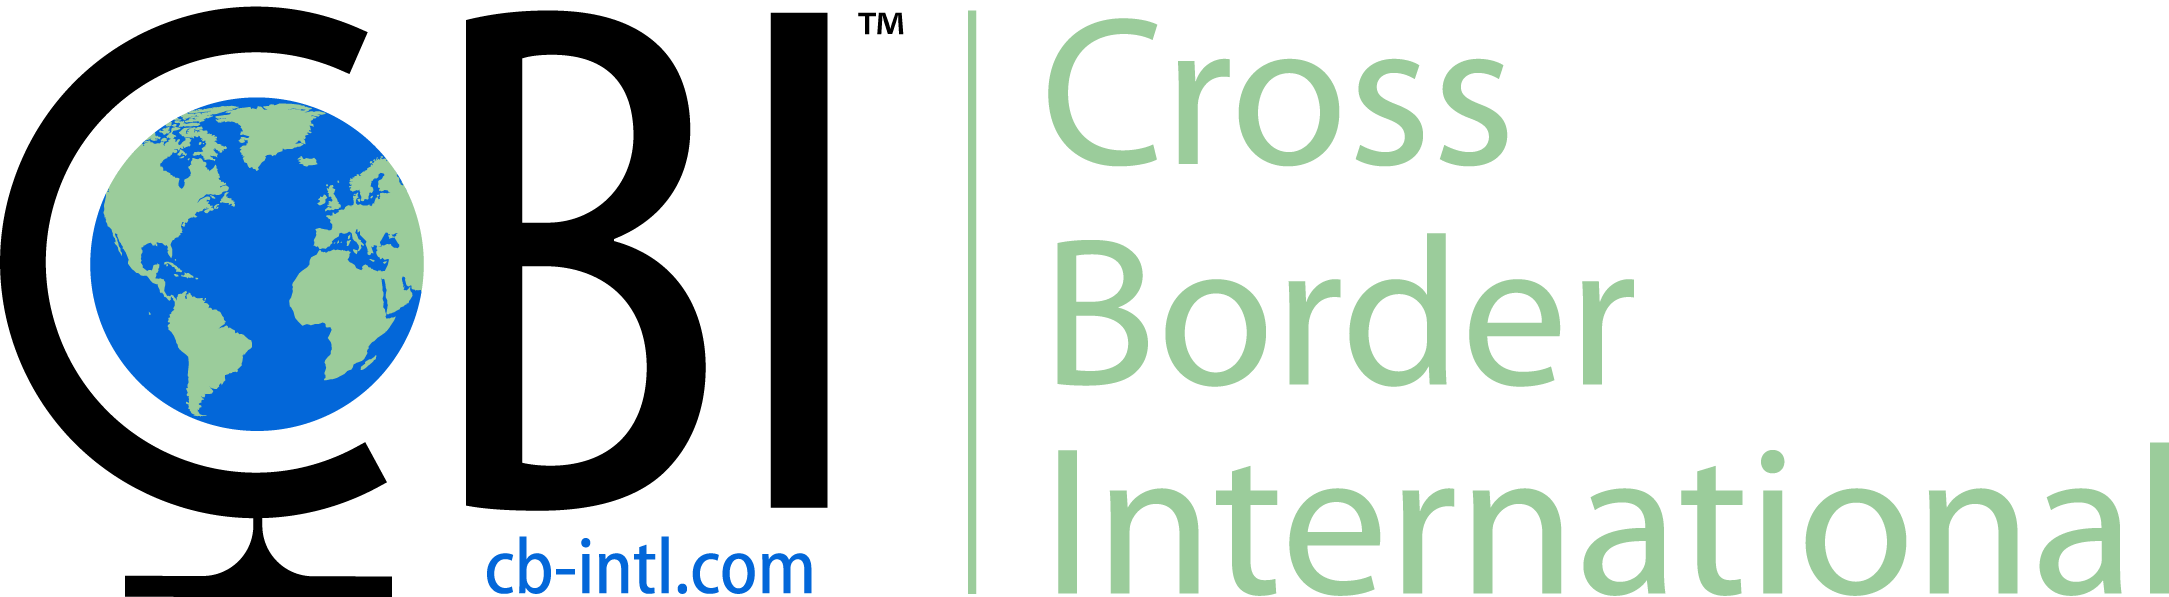 Cbi Logo - Business Services Organisation Belfast (2169x597)